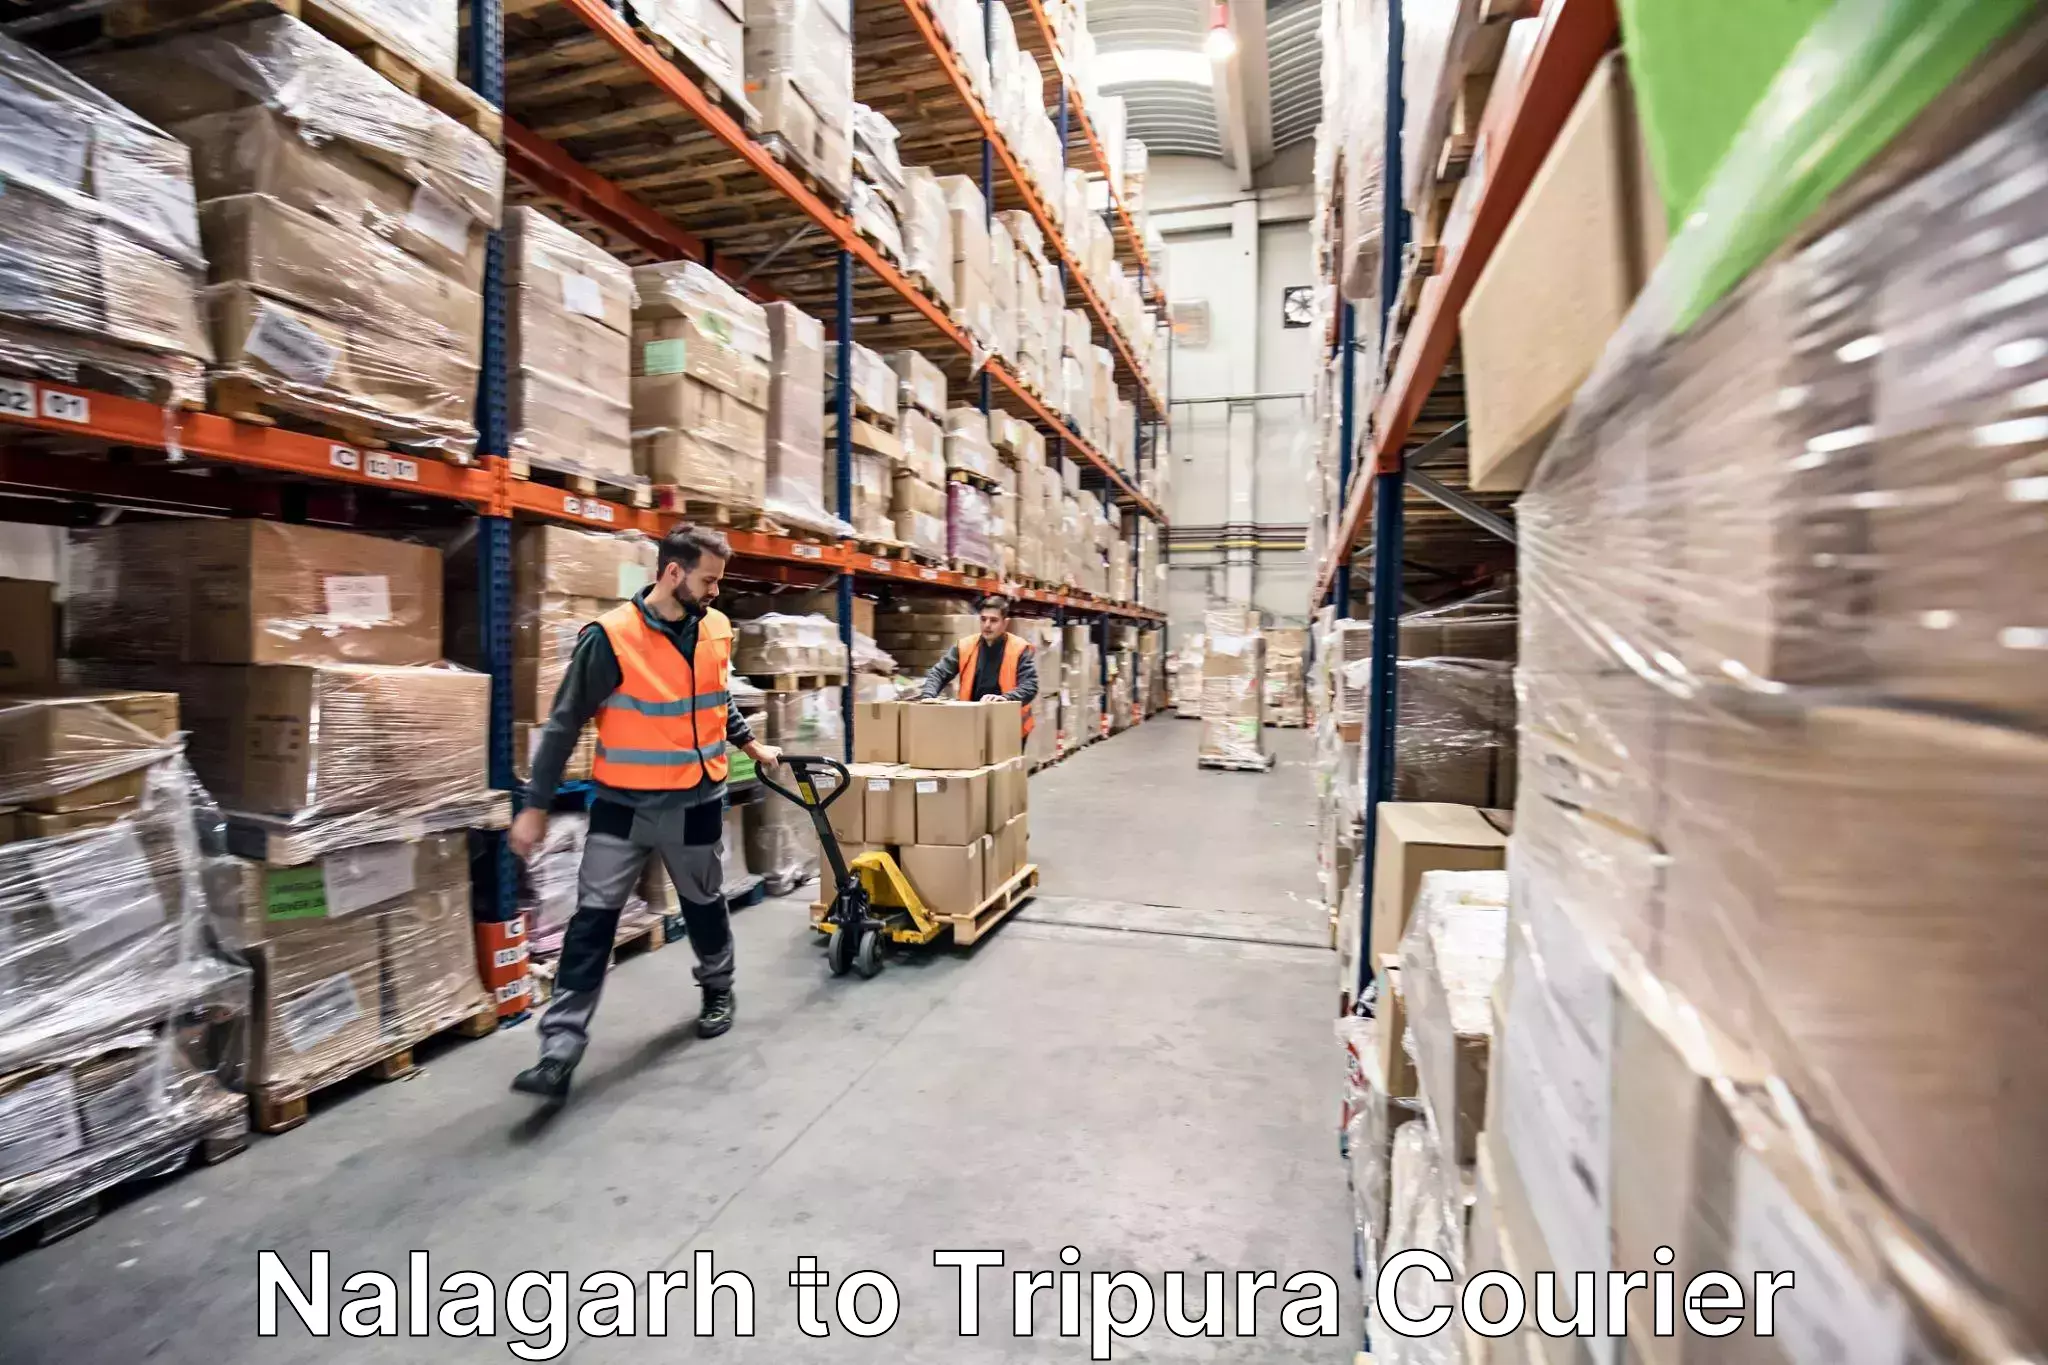 Professional furniture movers Nalagarh to Udaipur Tripura